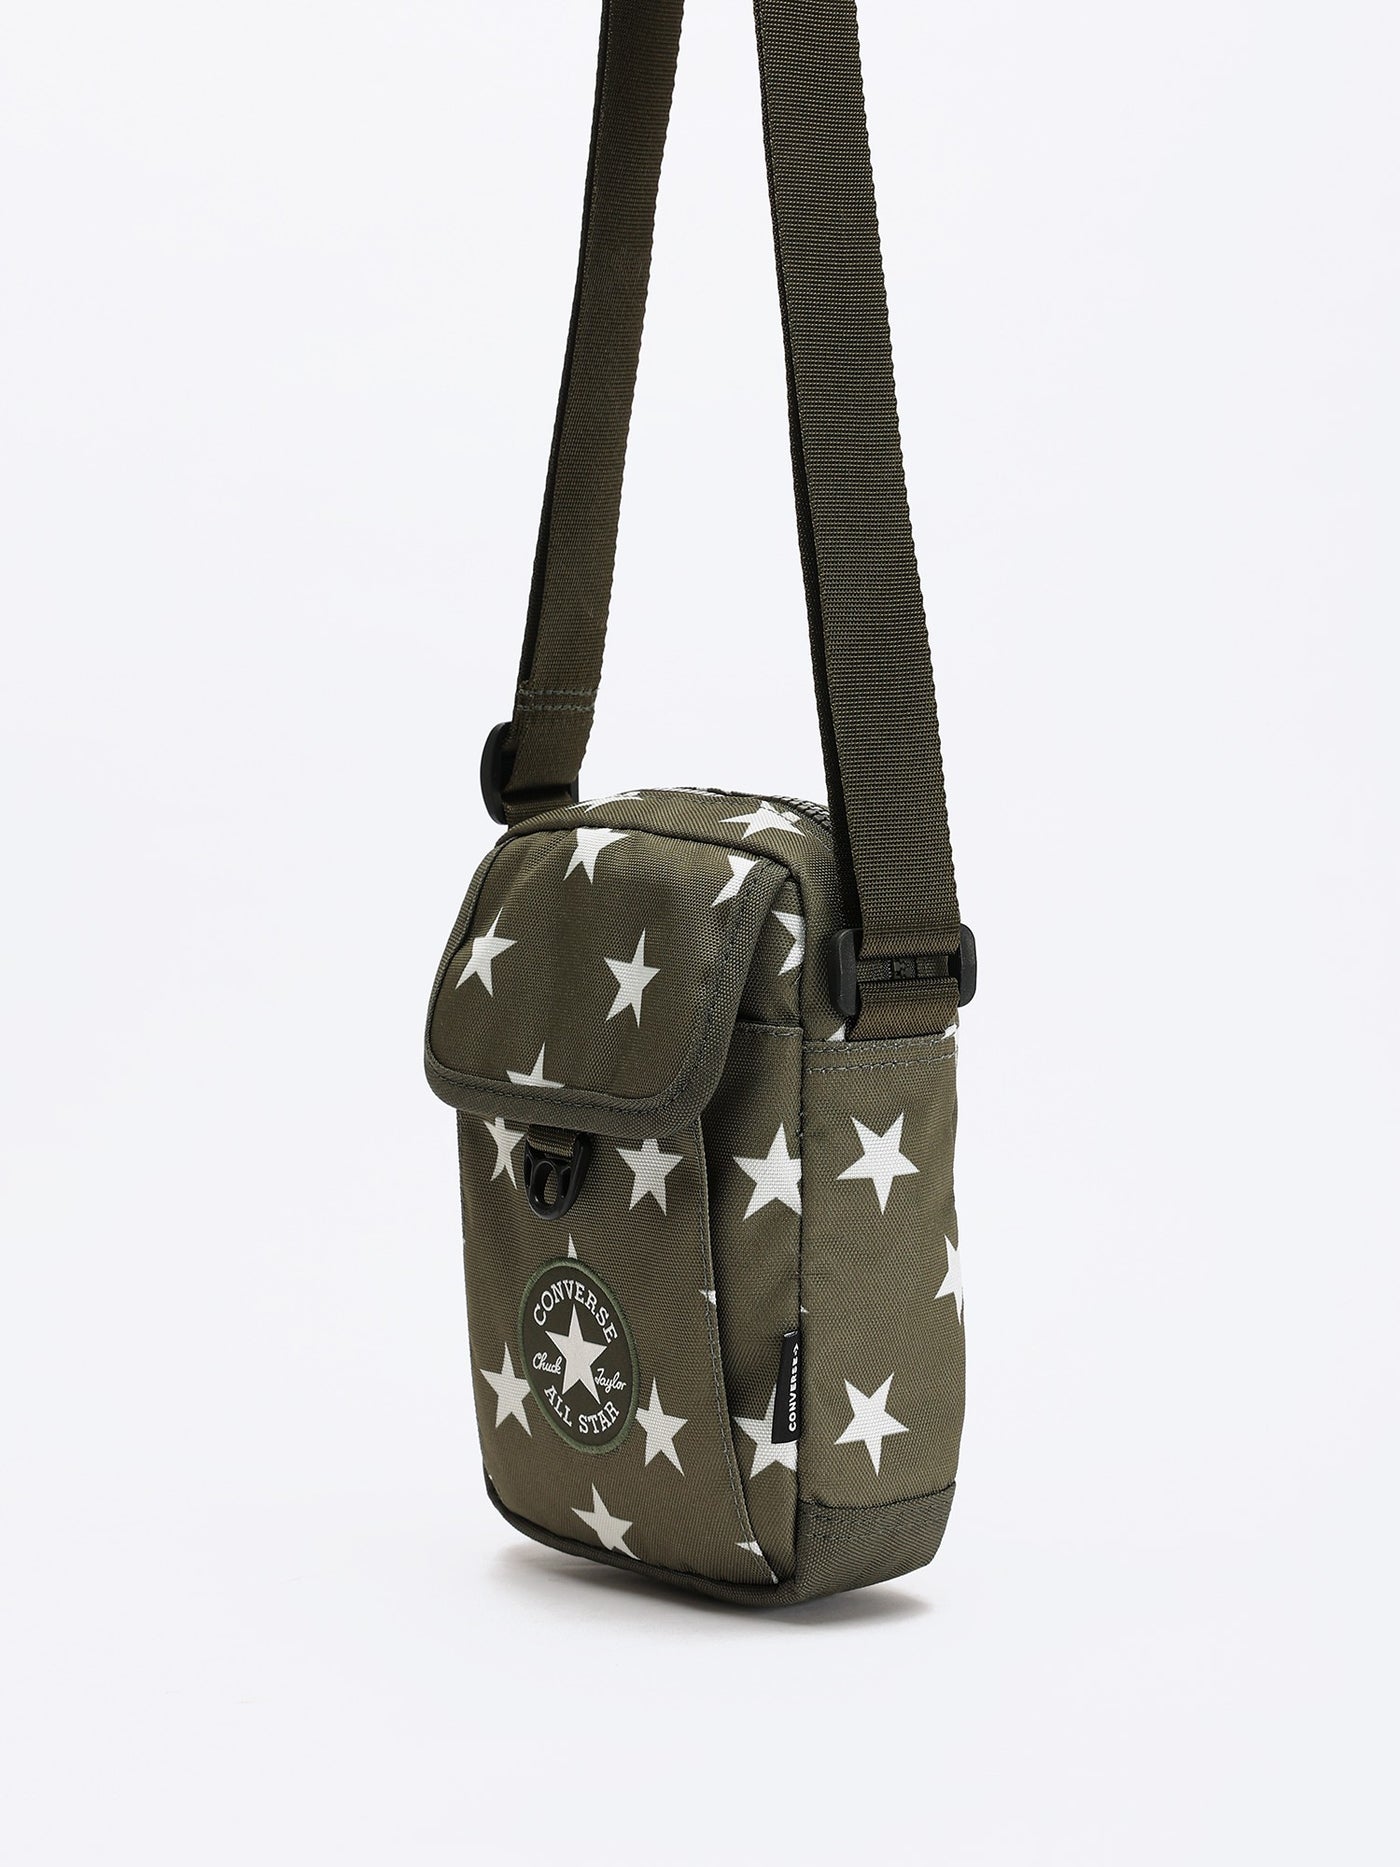 Unisex Crossbody Bag - Star Printed